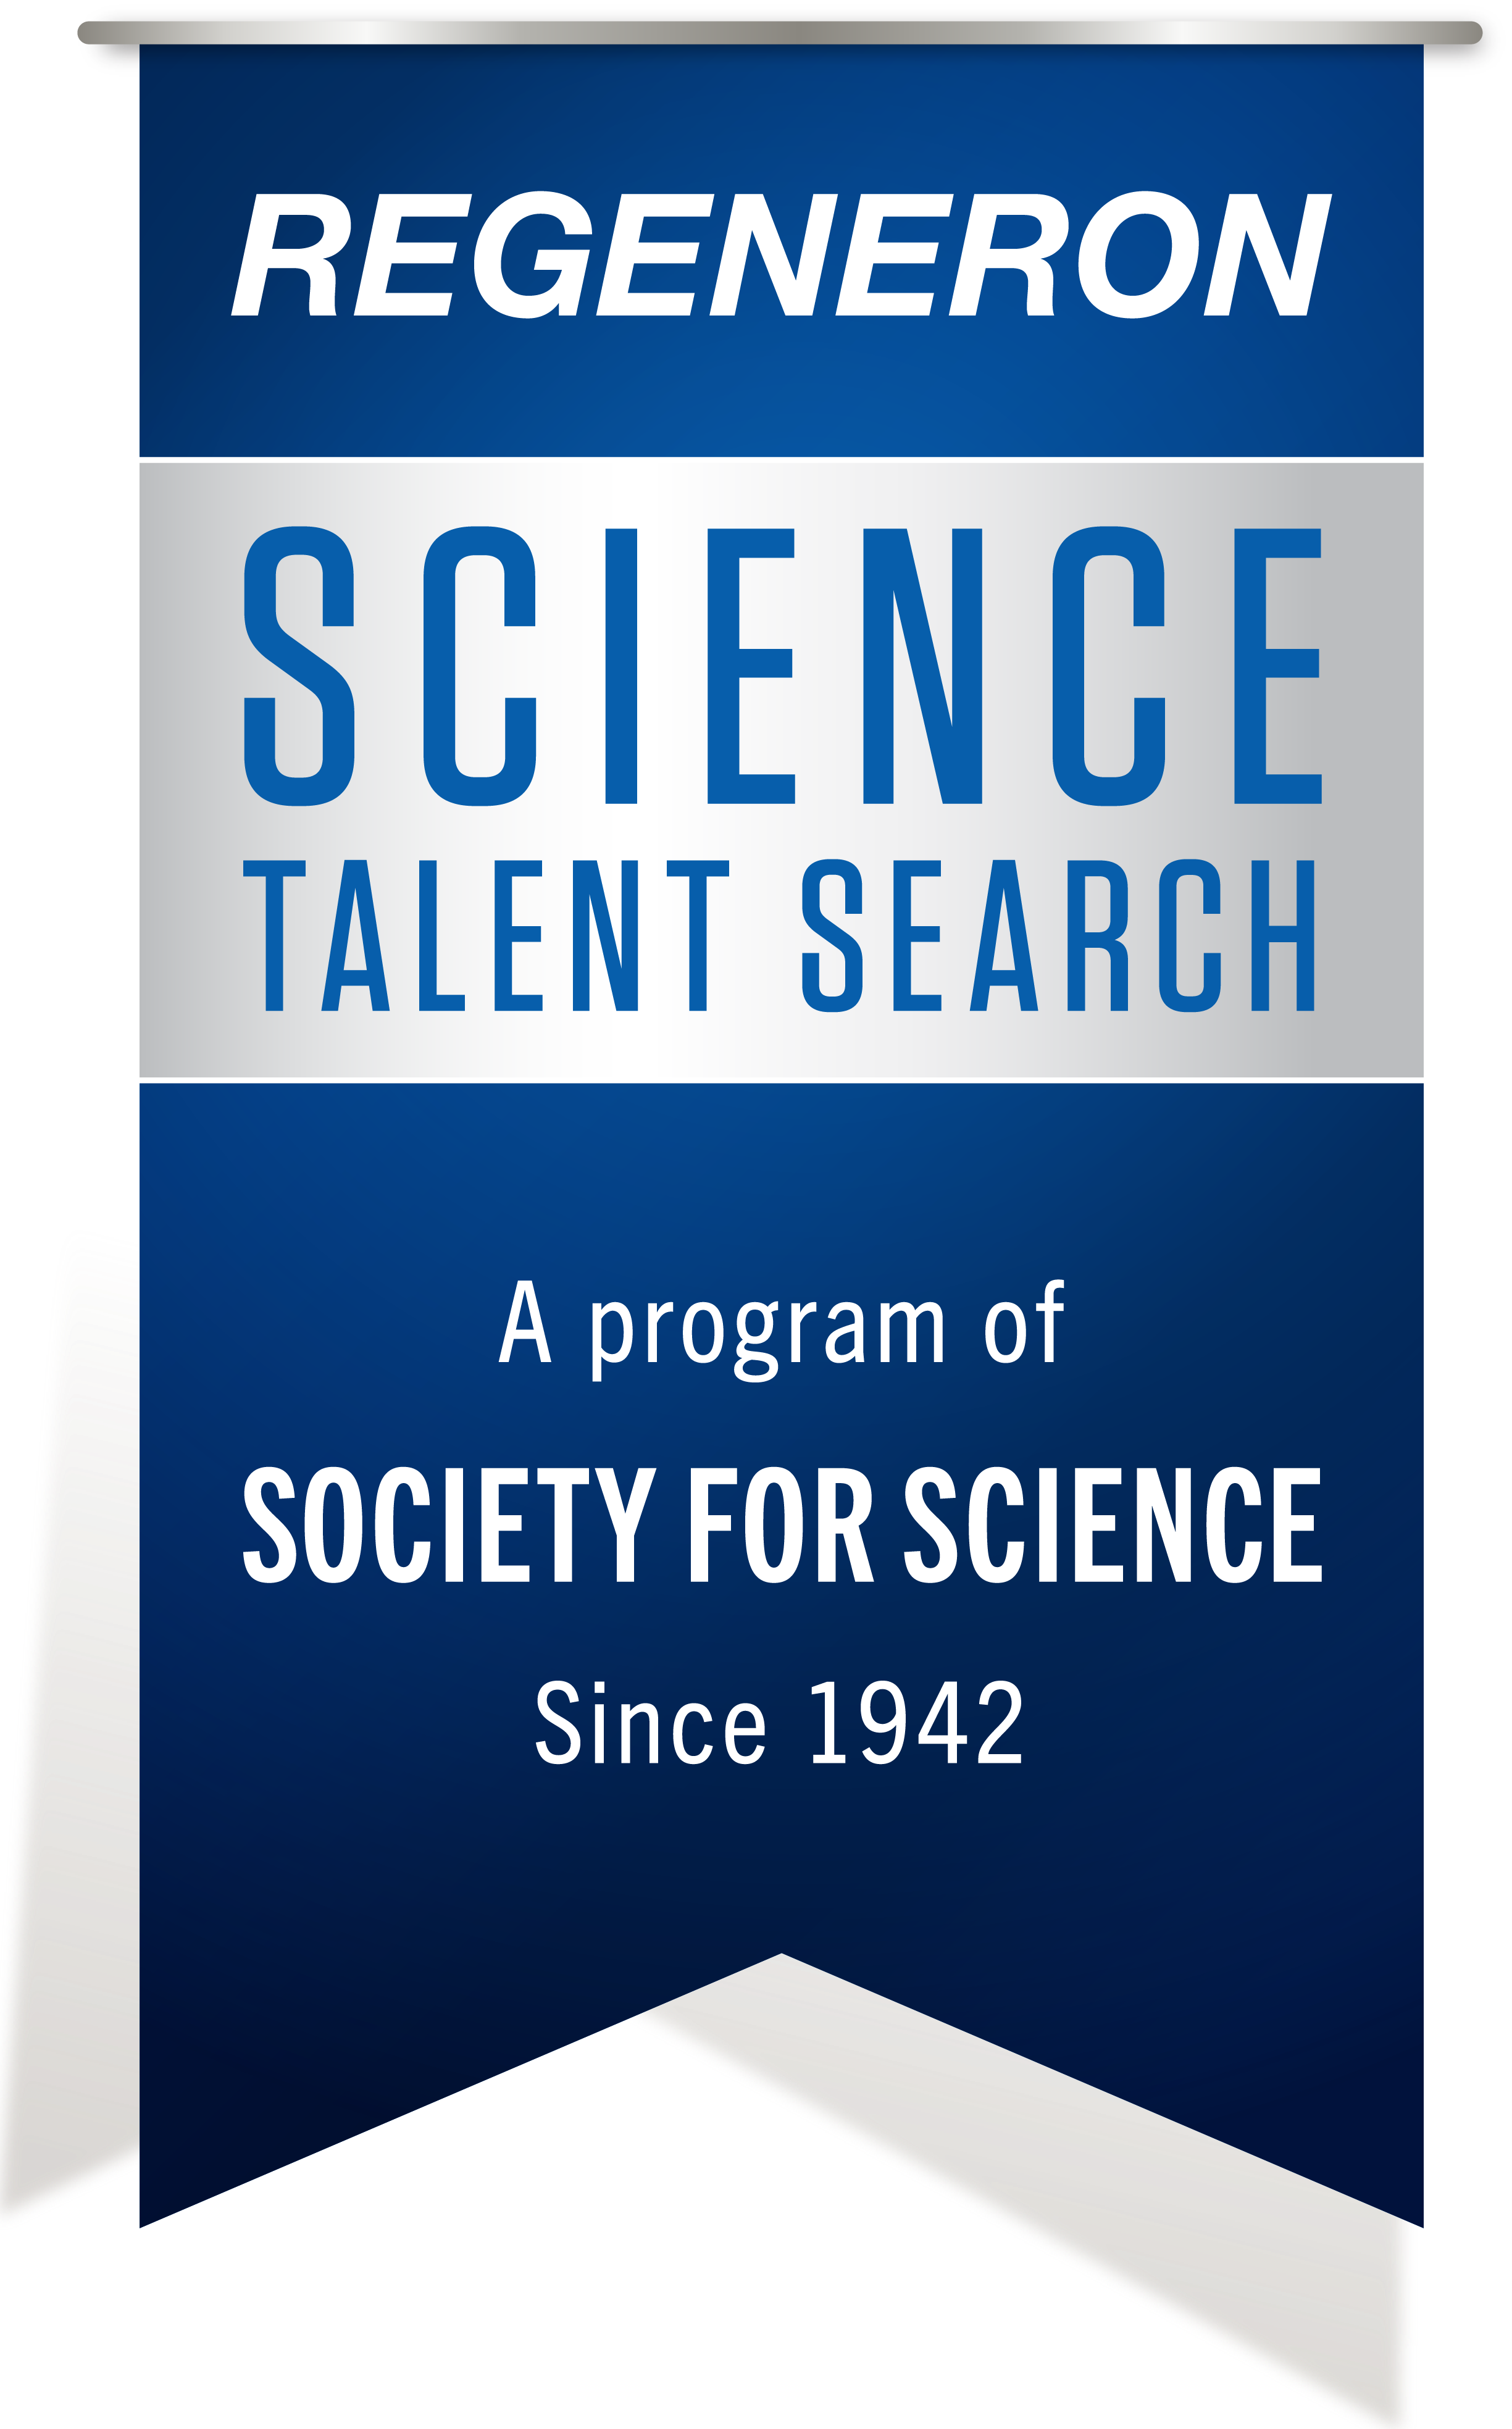 Regeneron Science Talent Search logo